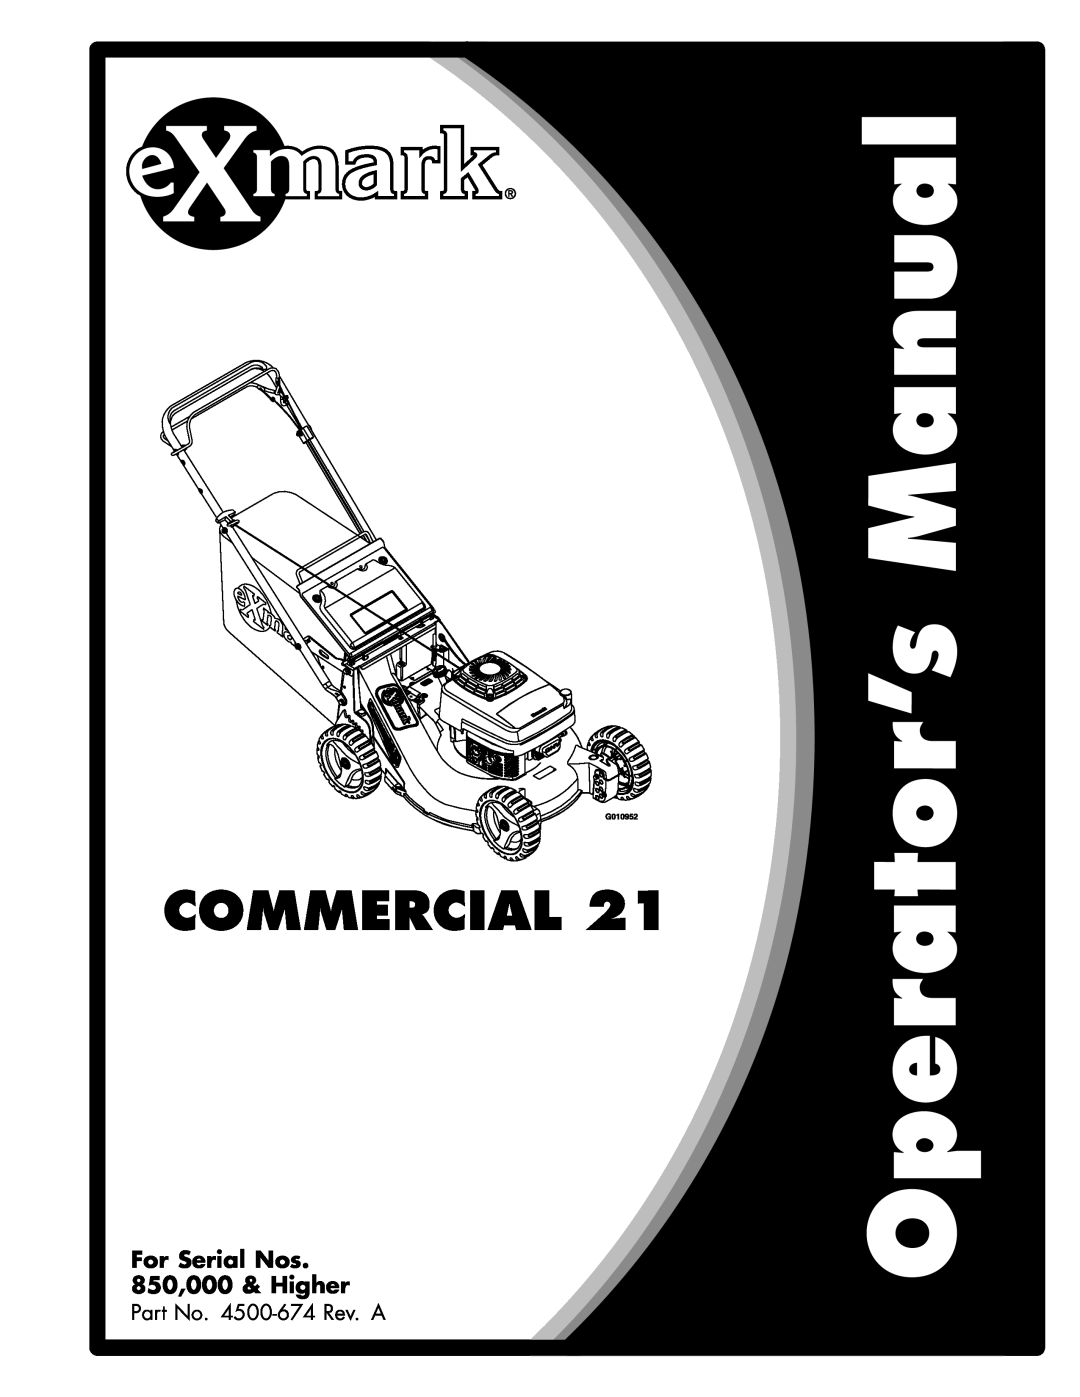 Exmark manual Quest Sp Models, For Serial Nos 850,000 & Higher, Part No. 4500-582Rev. A 